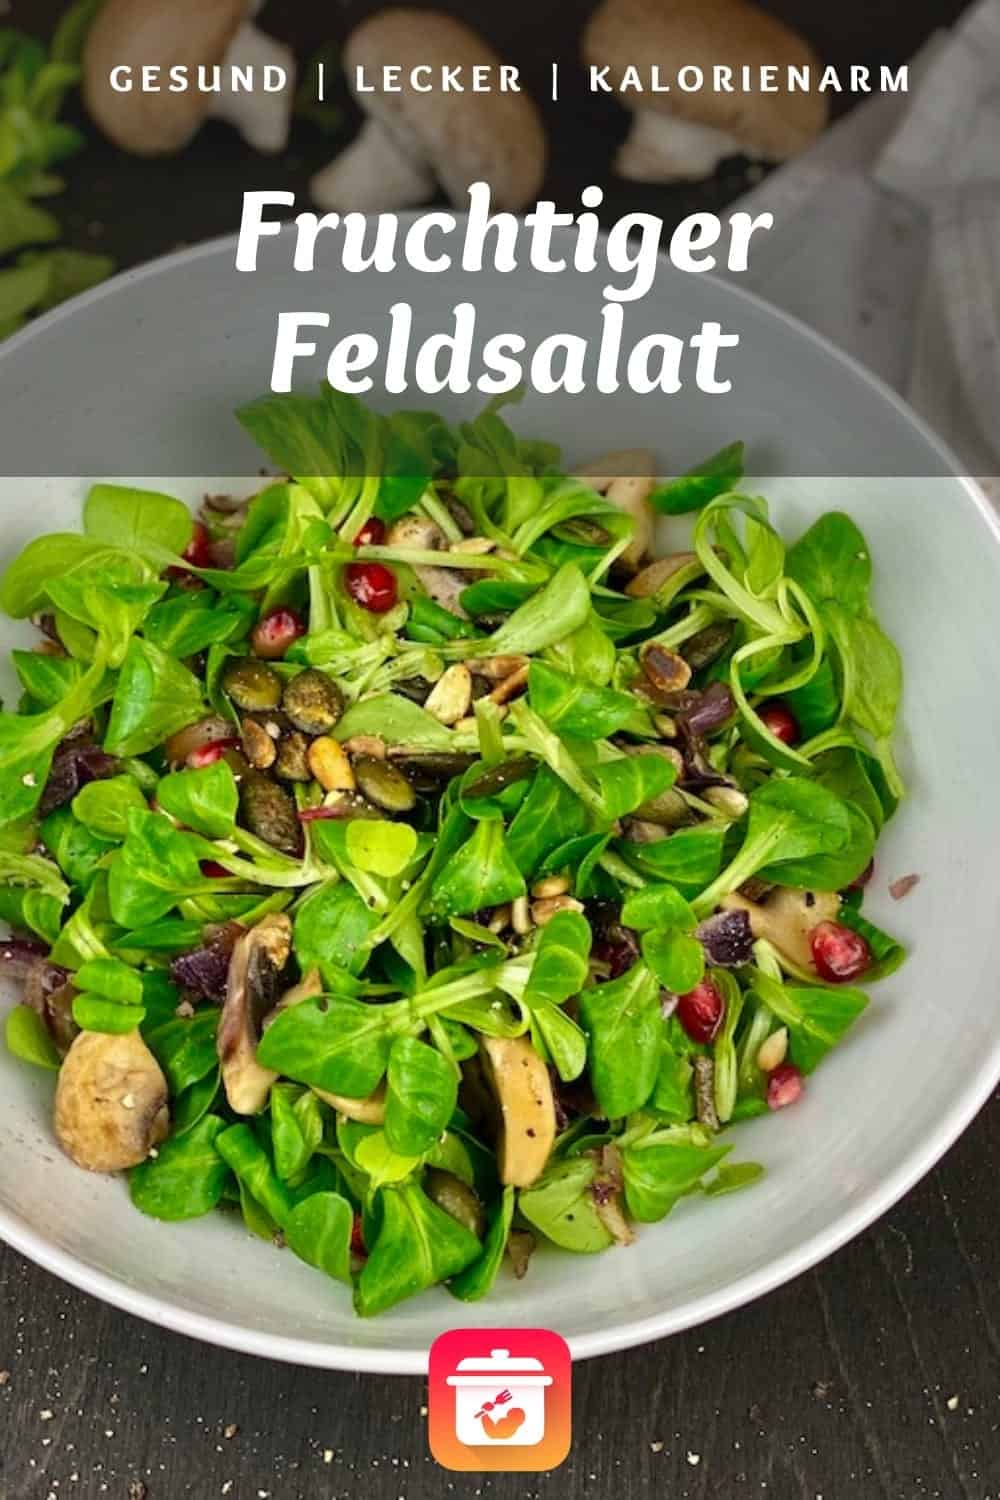 Fruchtiger Feldsalat - Gesundes Feldsalat Rezept